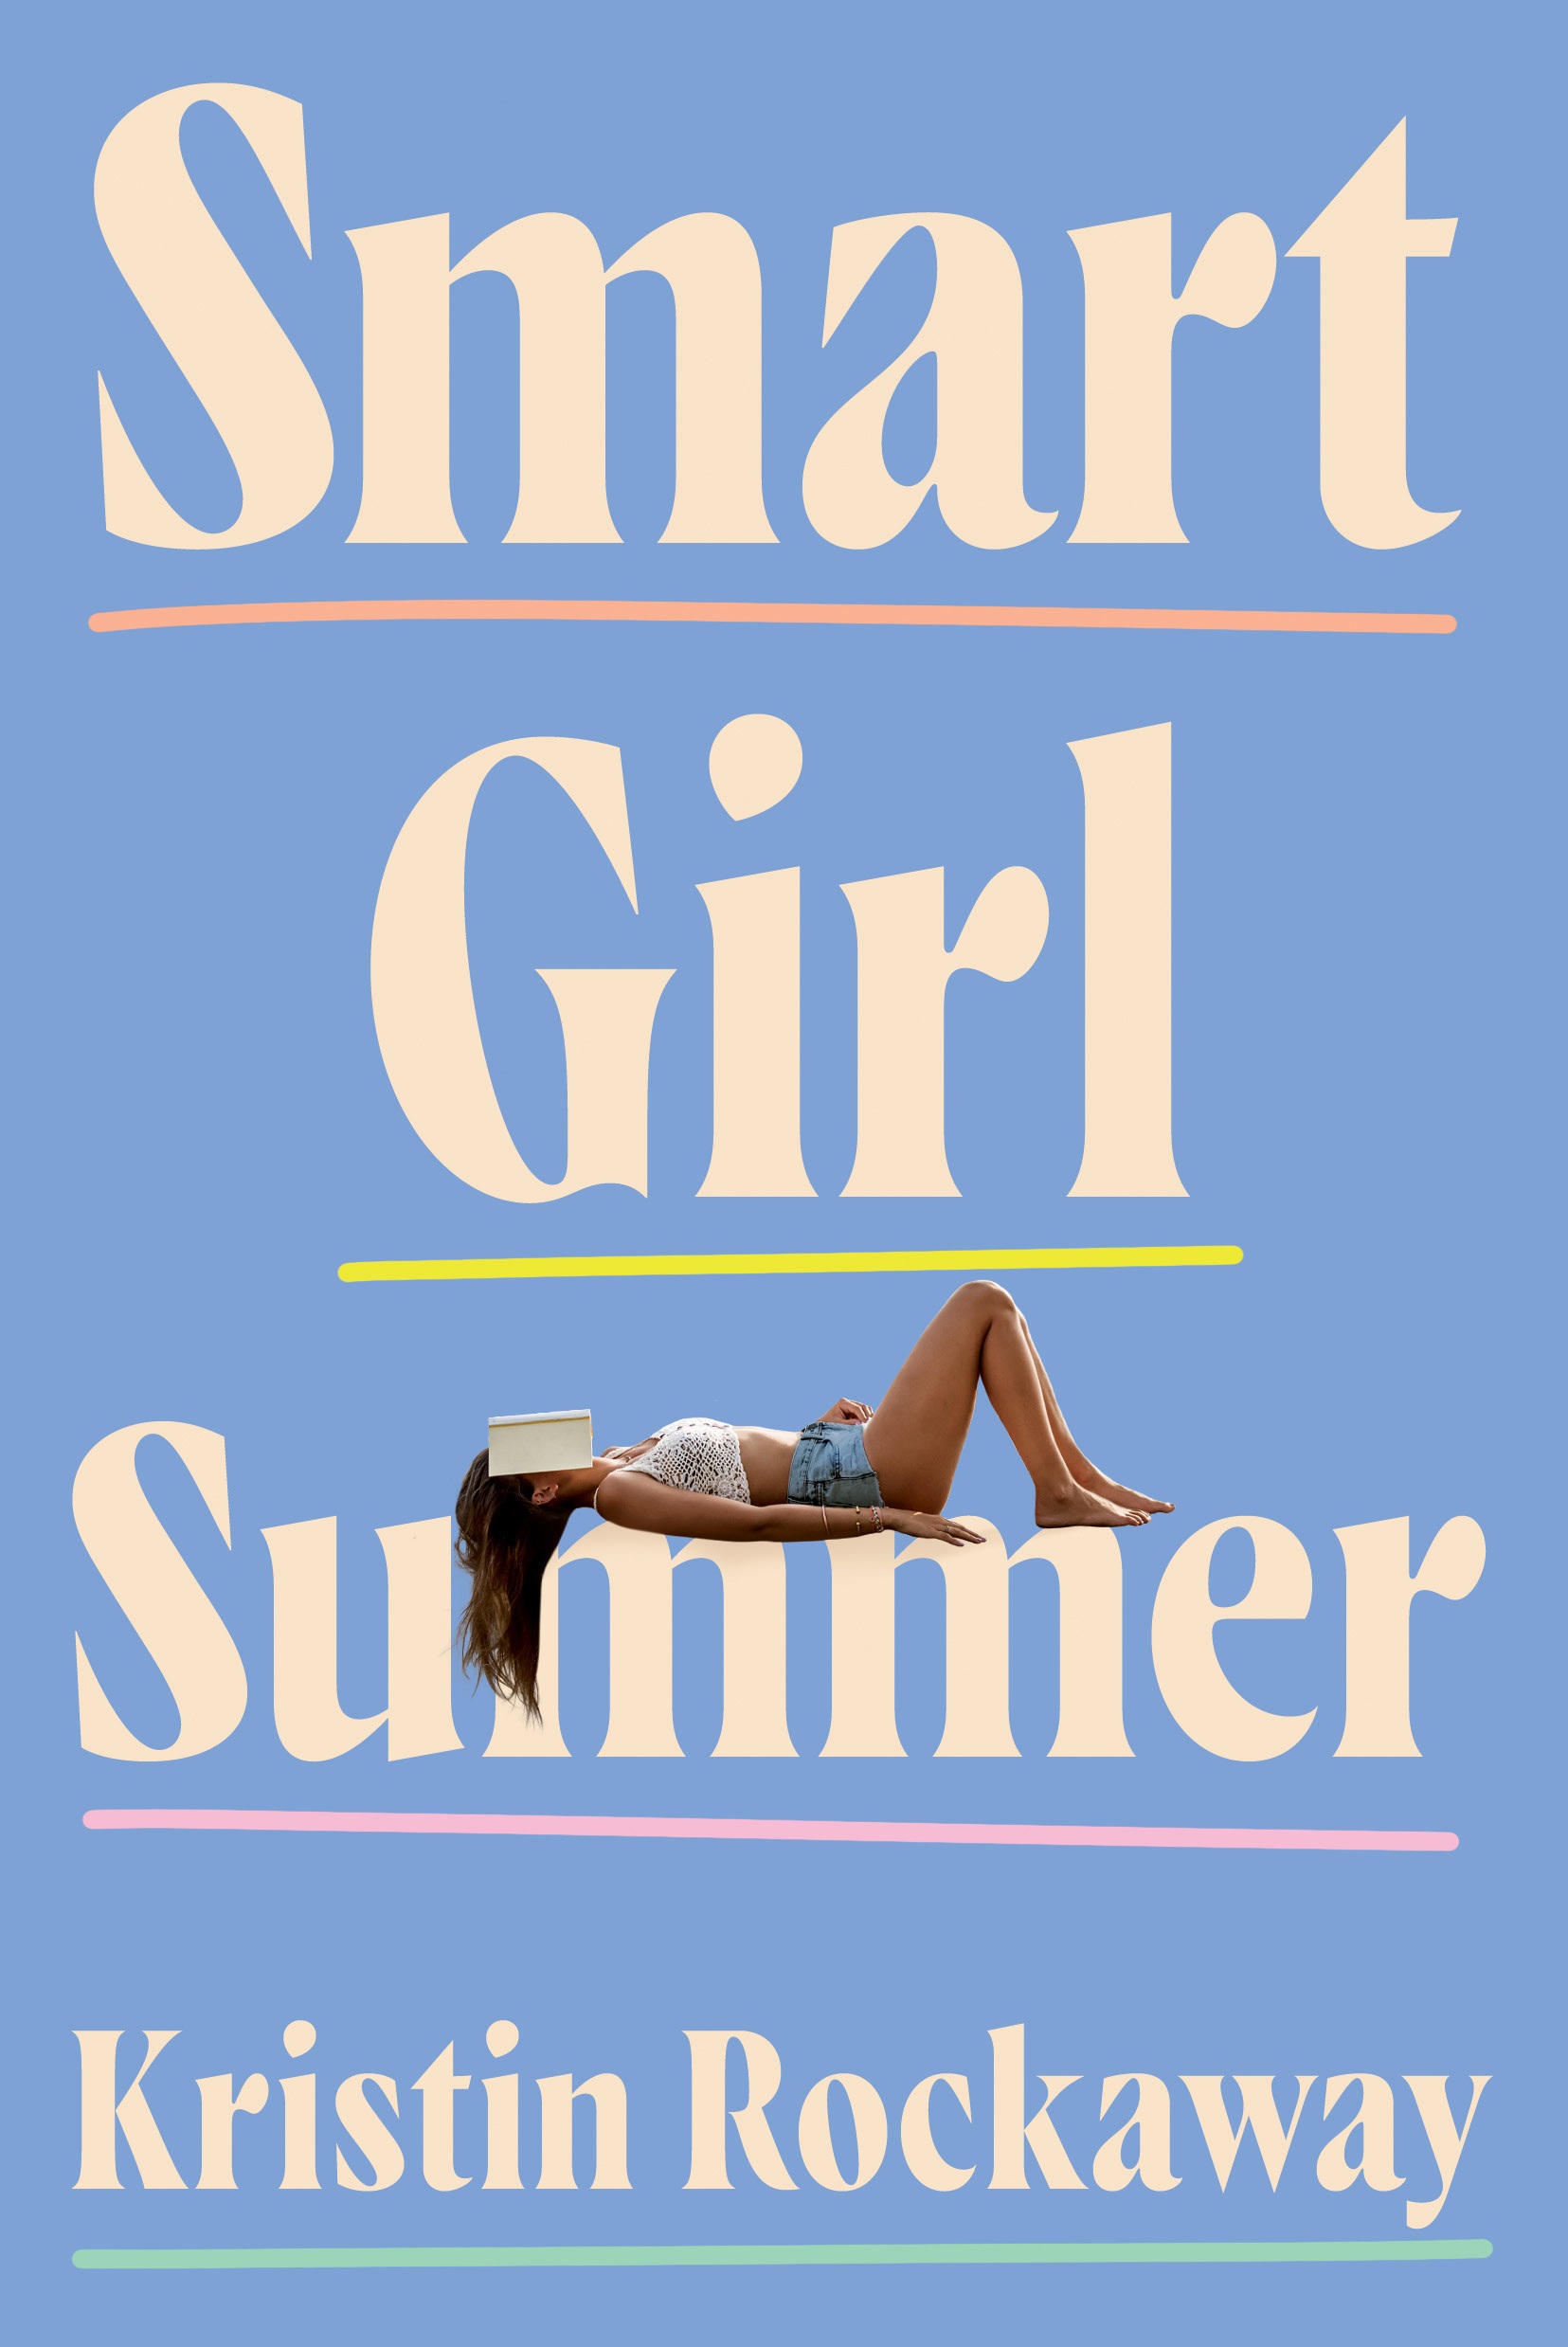 Smart Girl Summer by Kristin Rockaway PDF